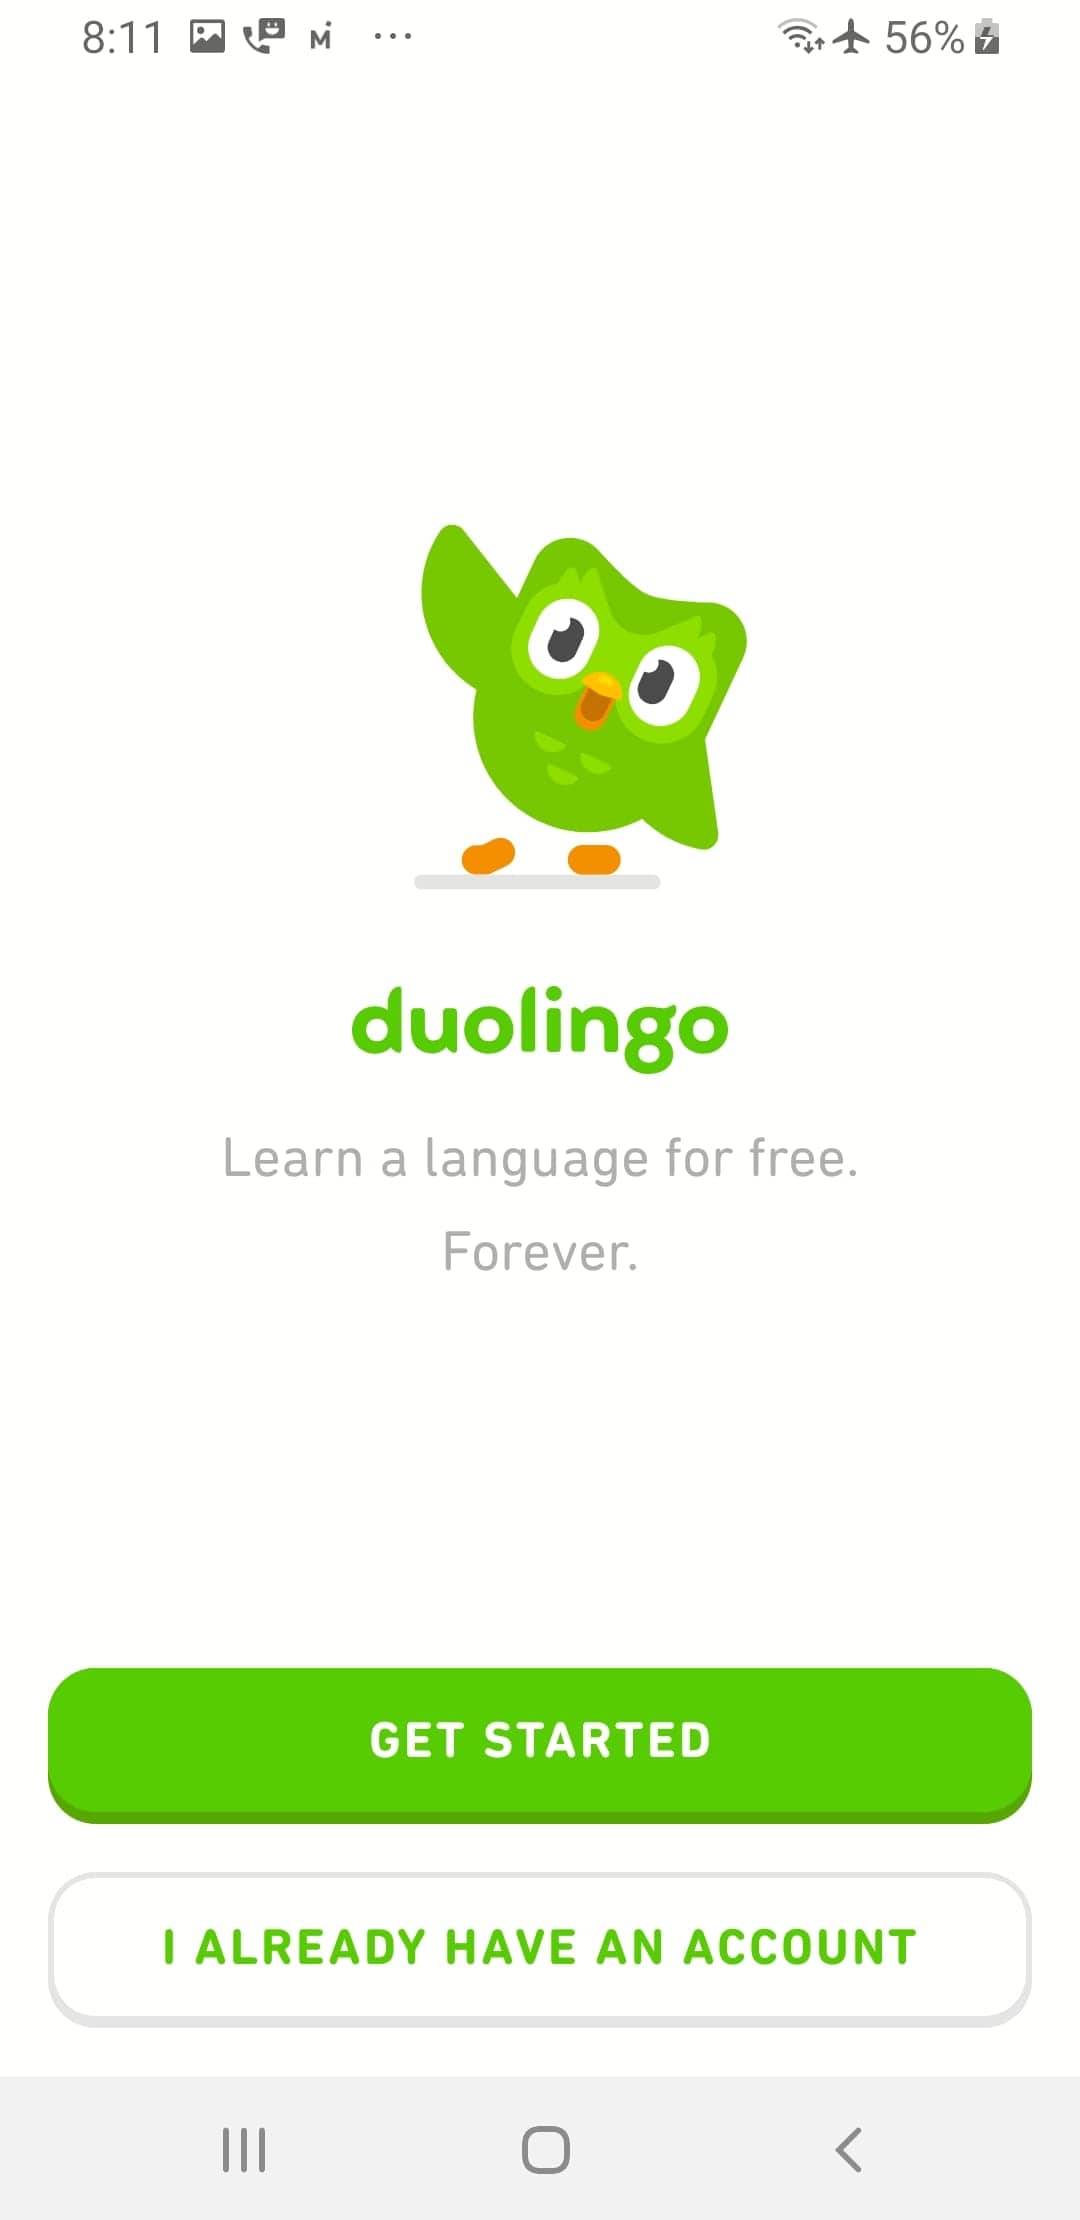 Screenshot From Our Duolingo Review